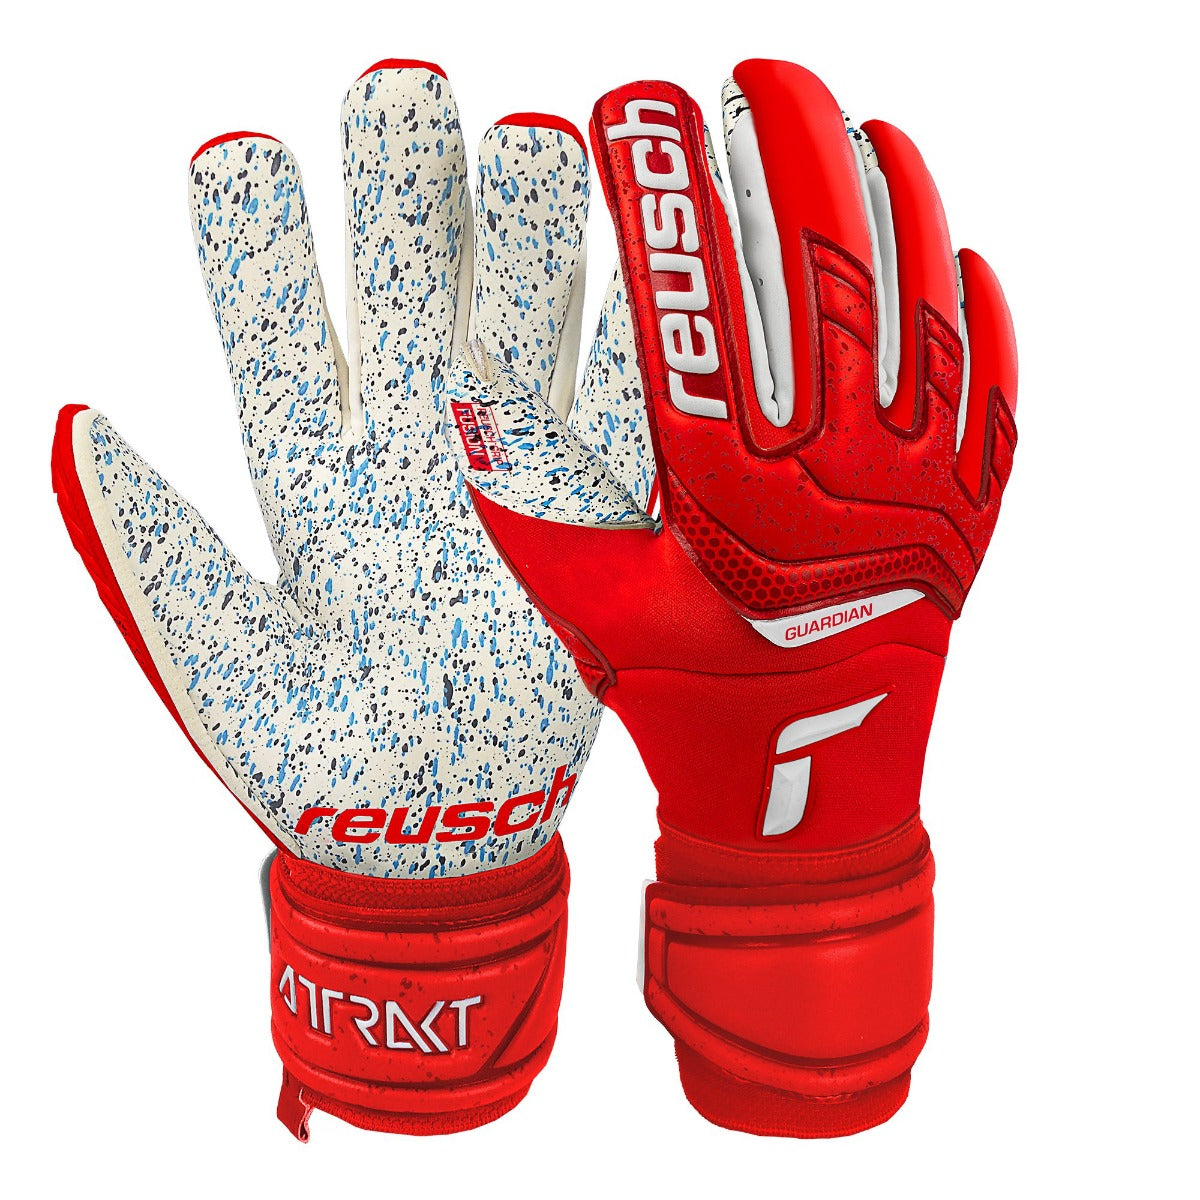 Reusch Attrakt Fusion Guardian Goalkeeper Gloves - Red-White (Pair)